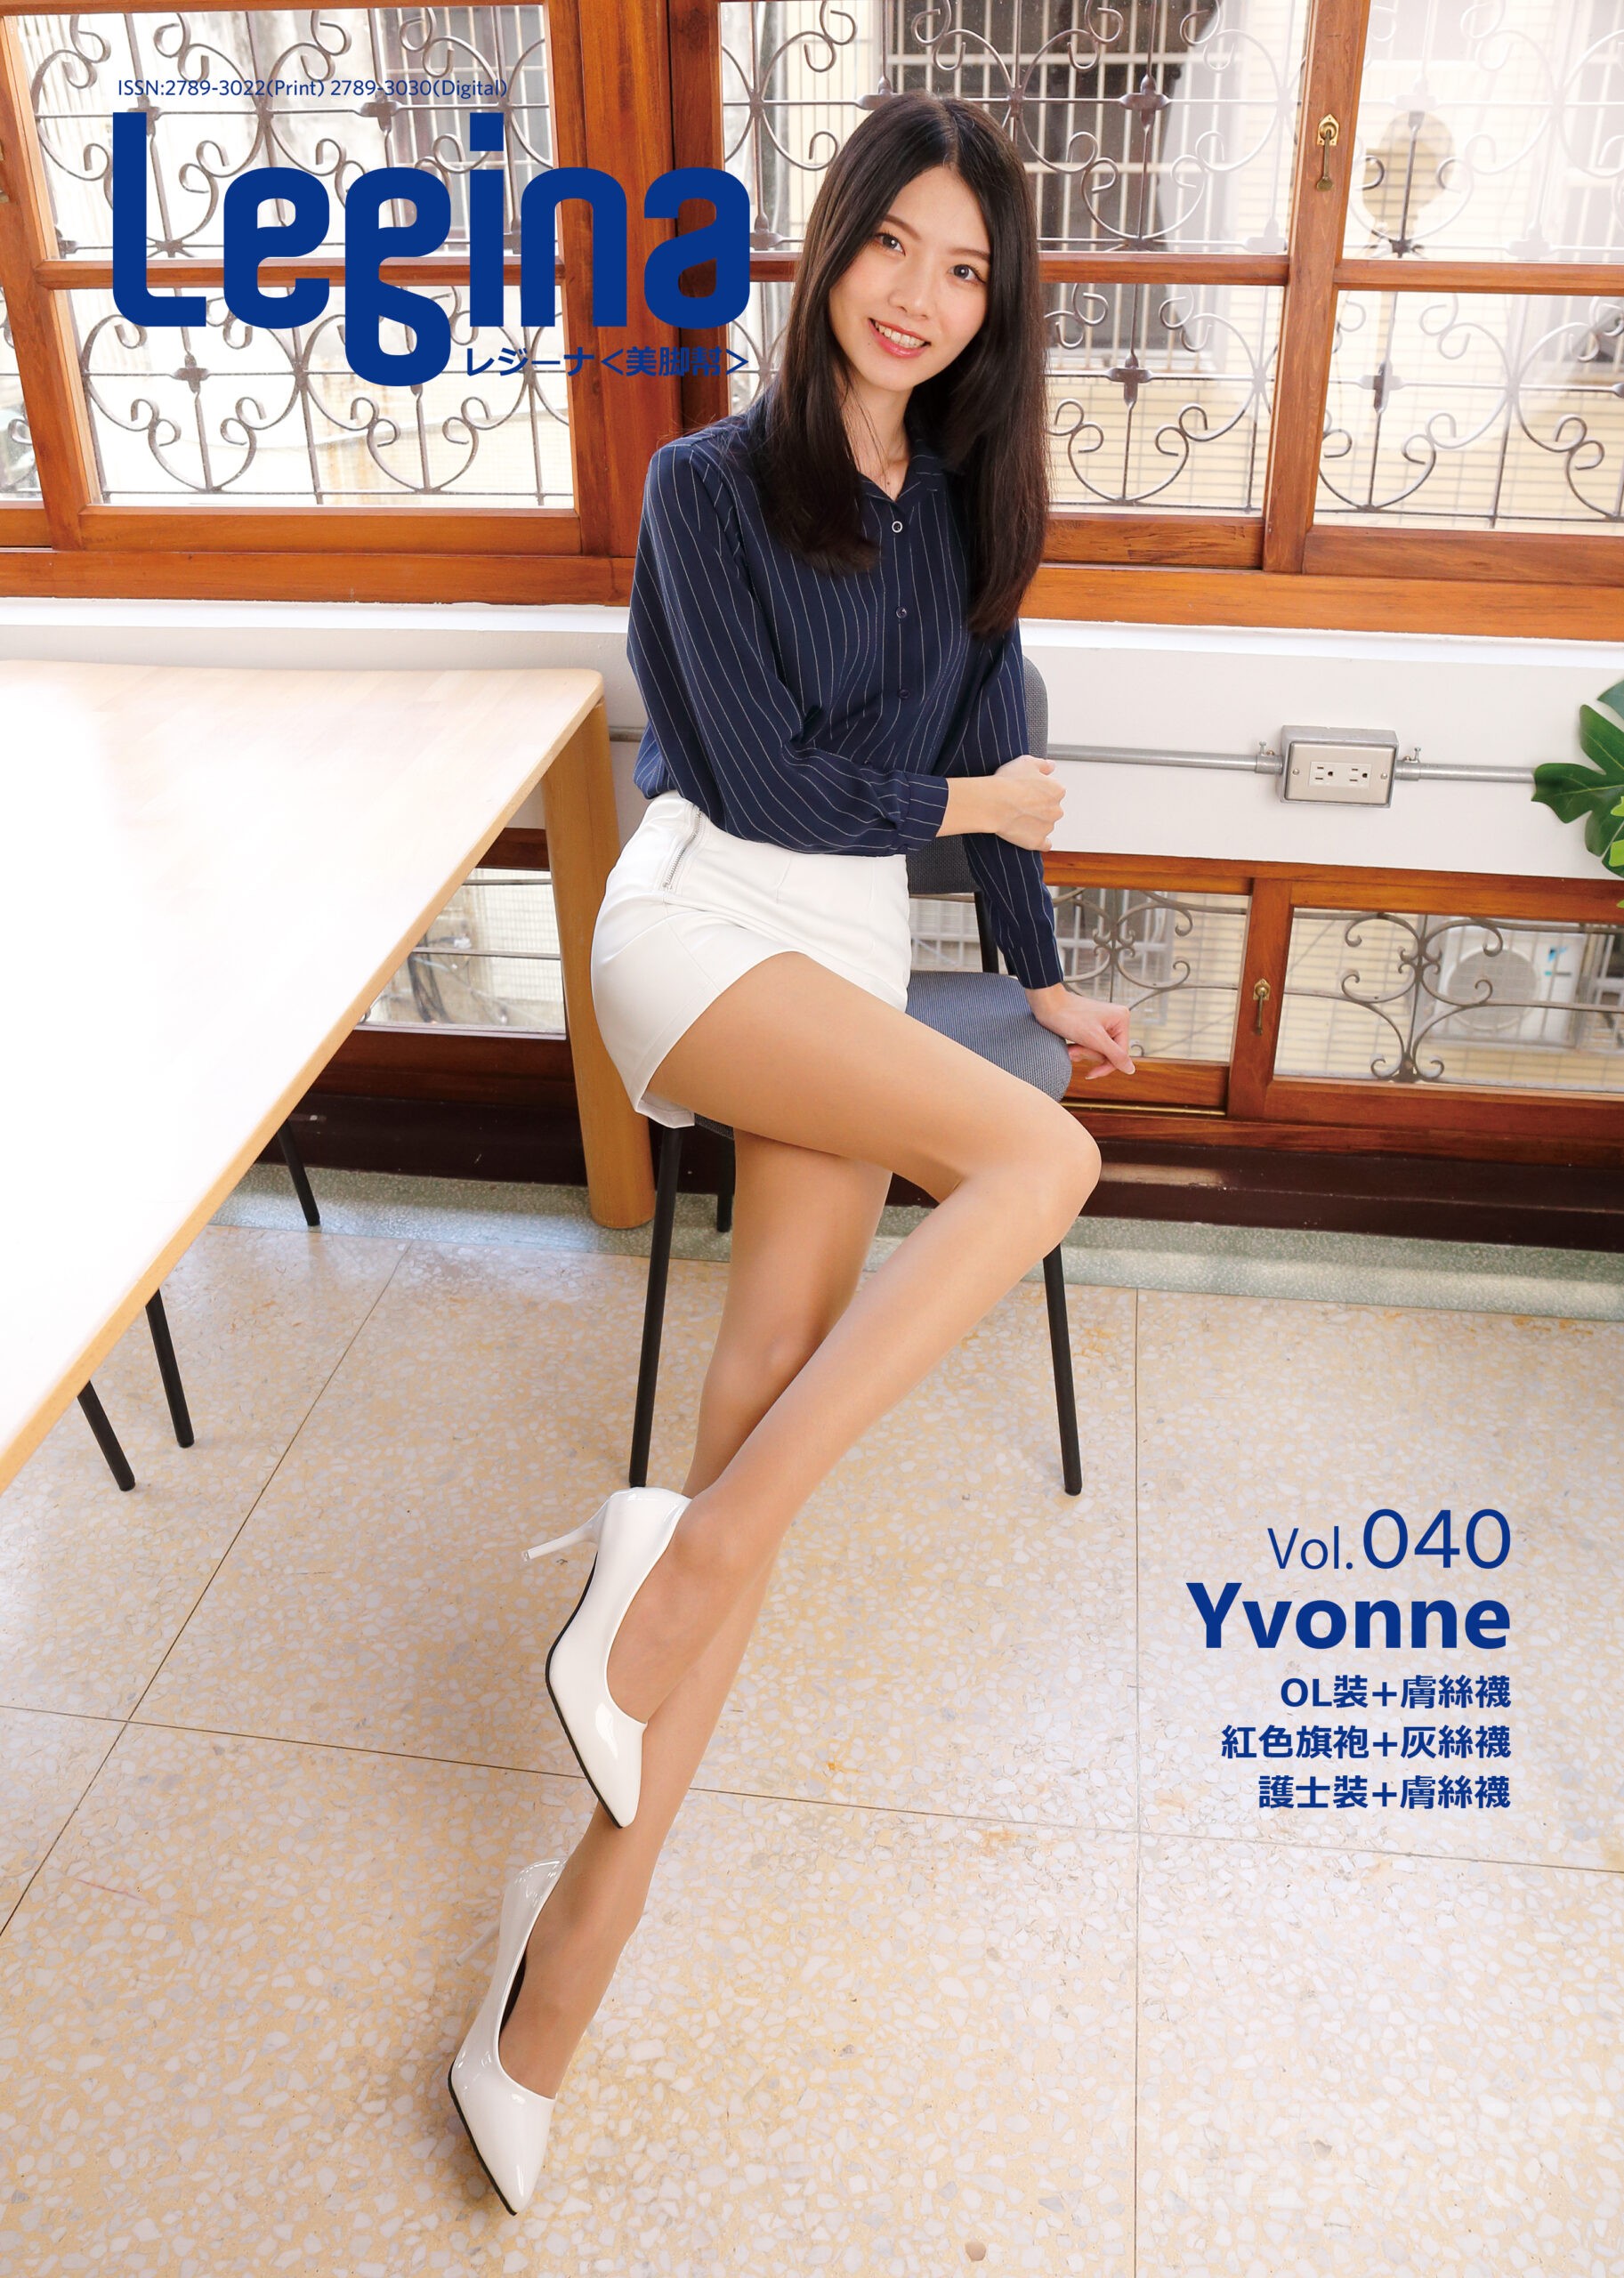 Vol.040 Yvonne 预售-1